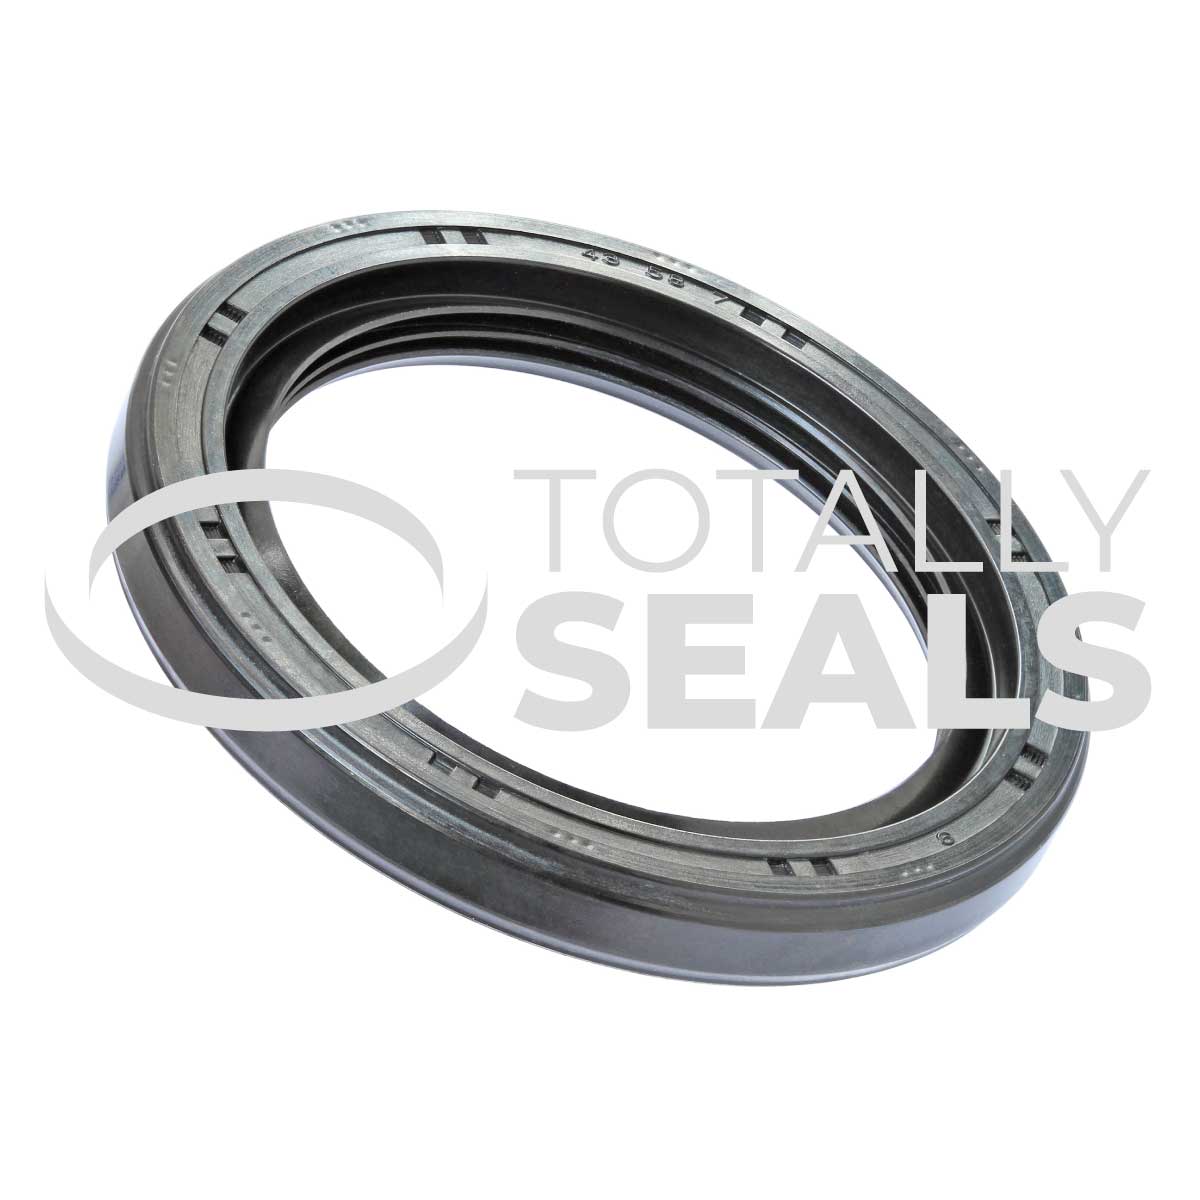 10mm x 20mm x 5mm - R23 (TC) Oil Seal - Totally Seals®